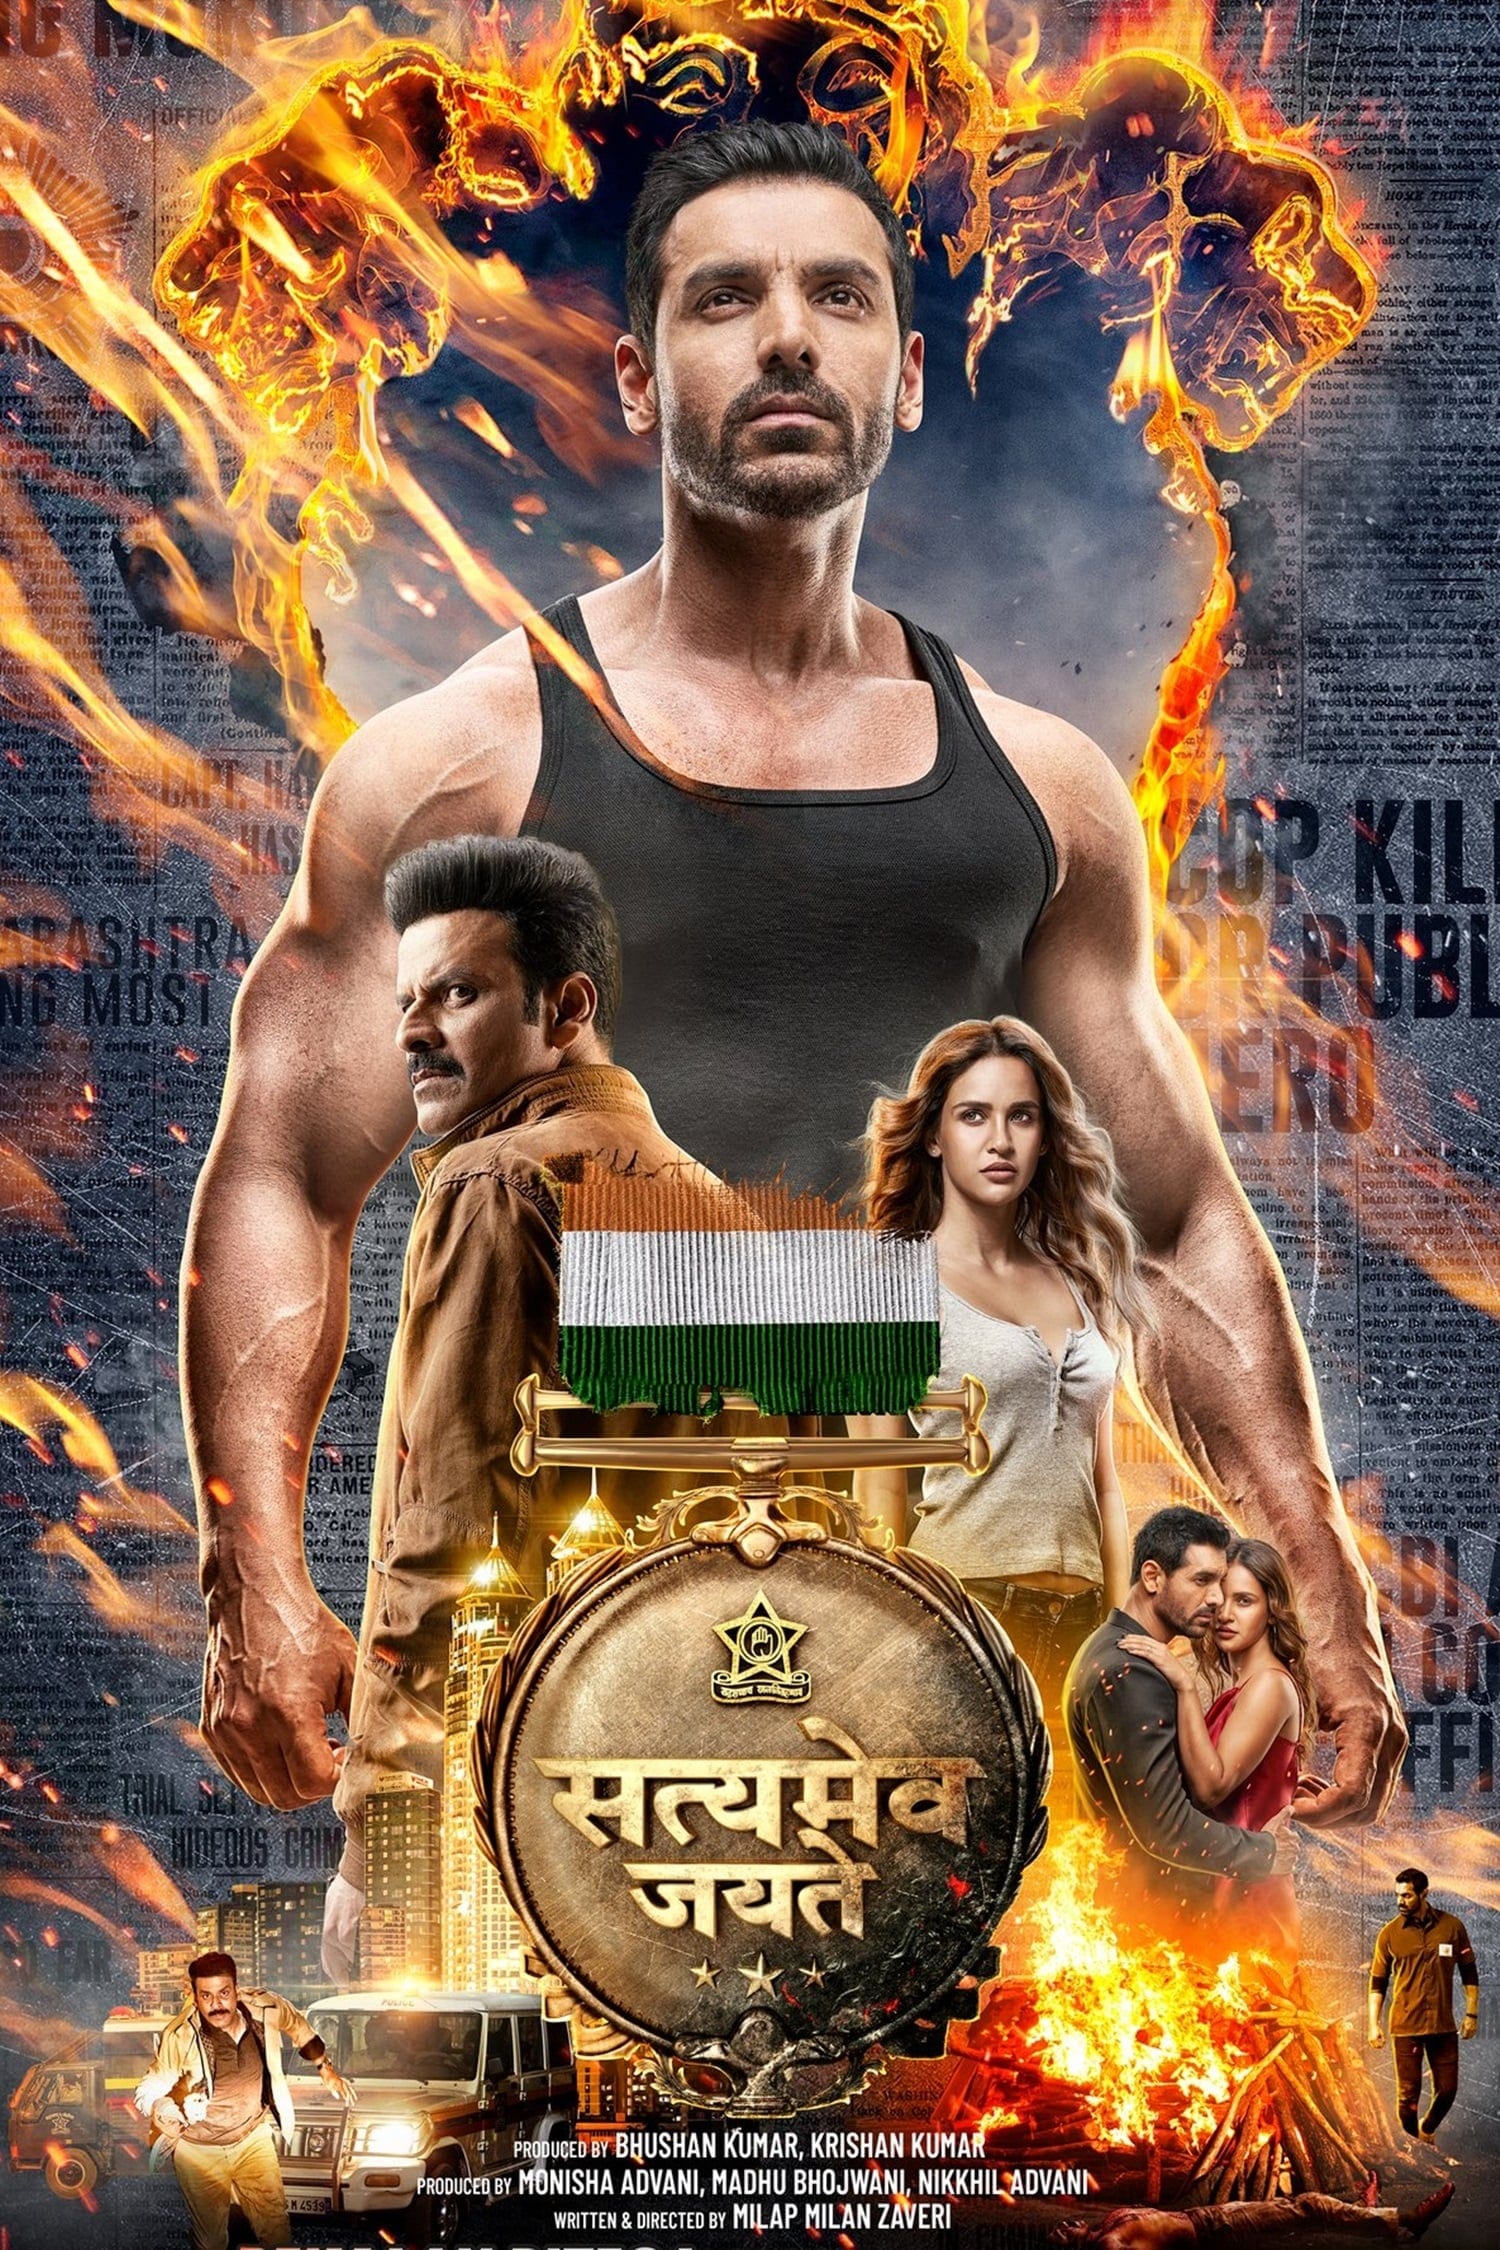 Poster for the movie "Satyameva Jayate"